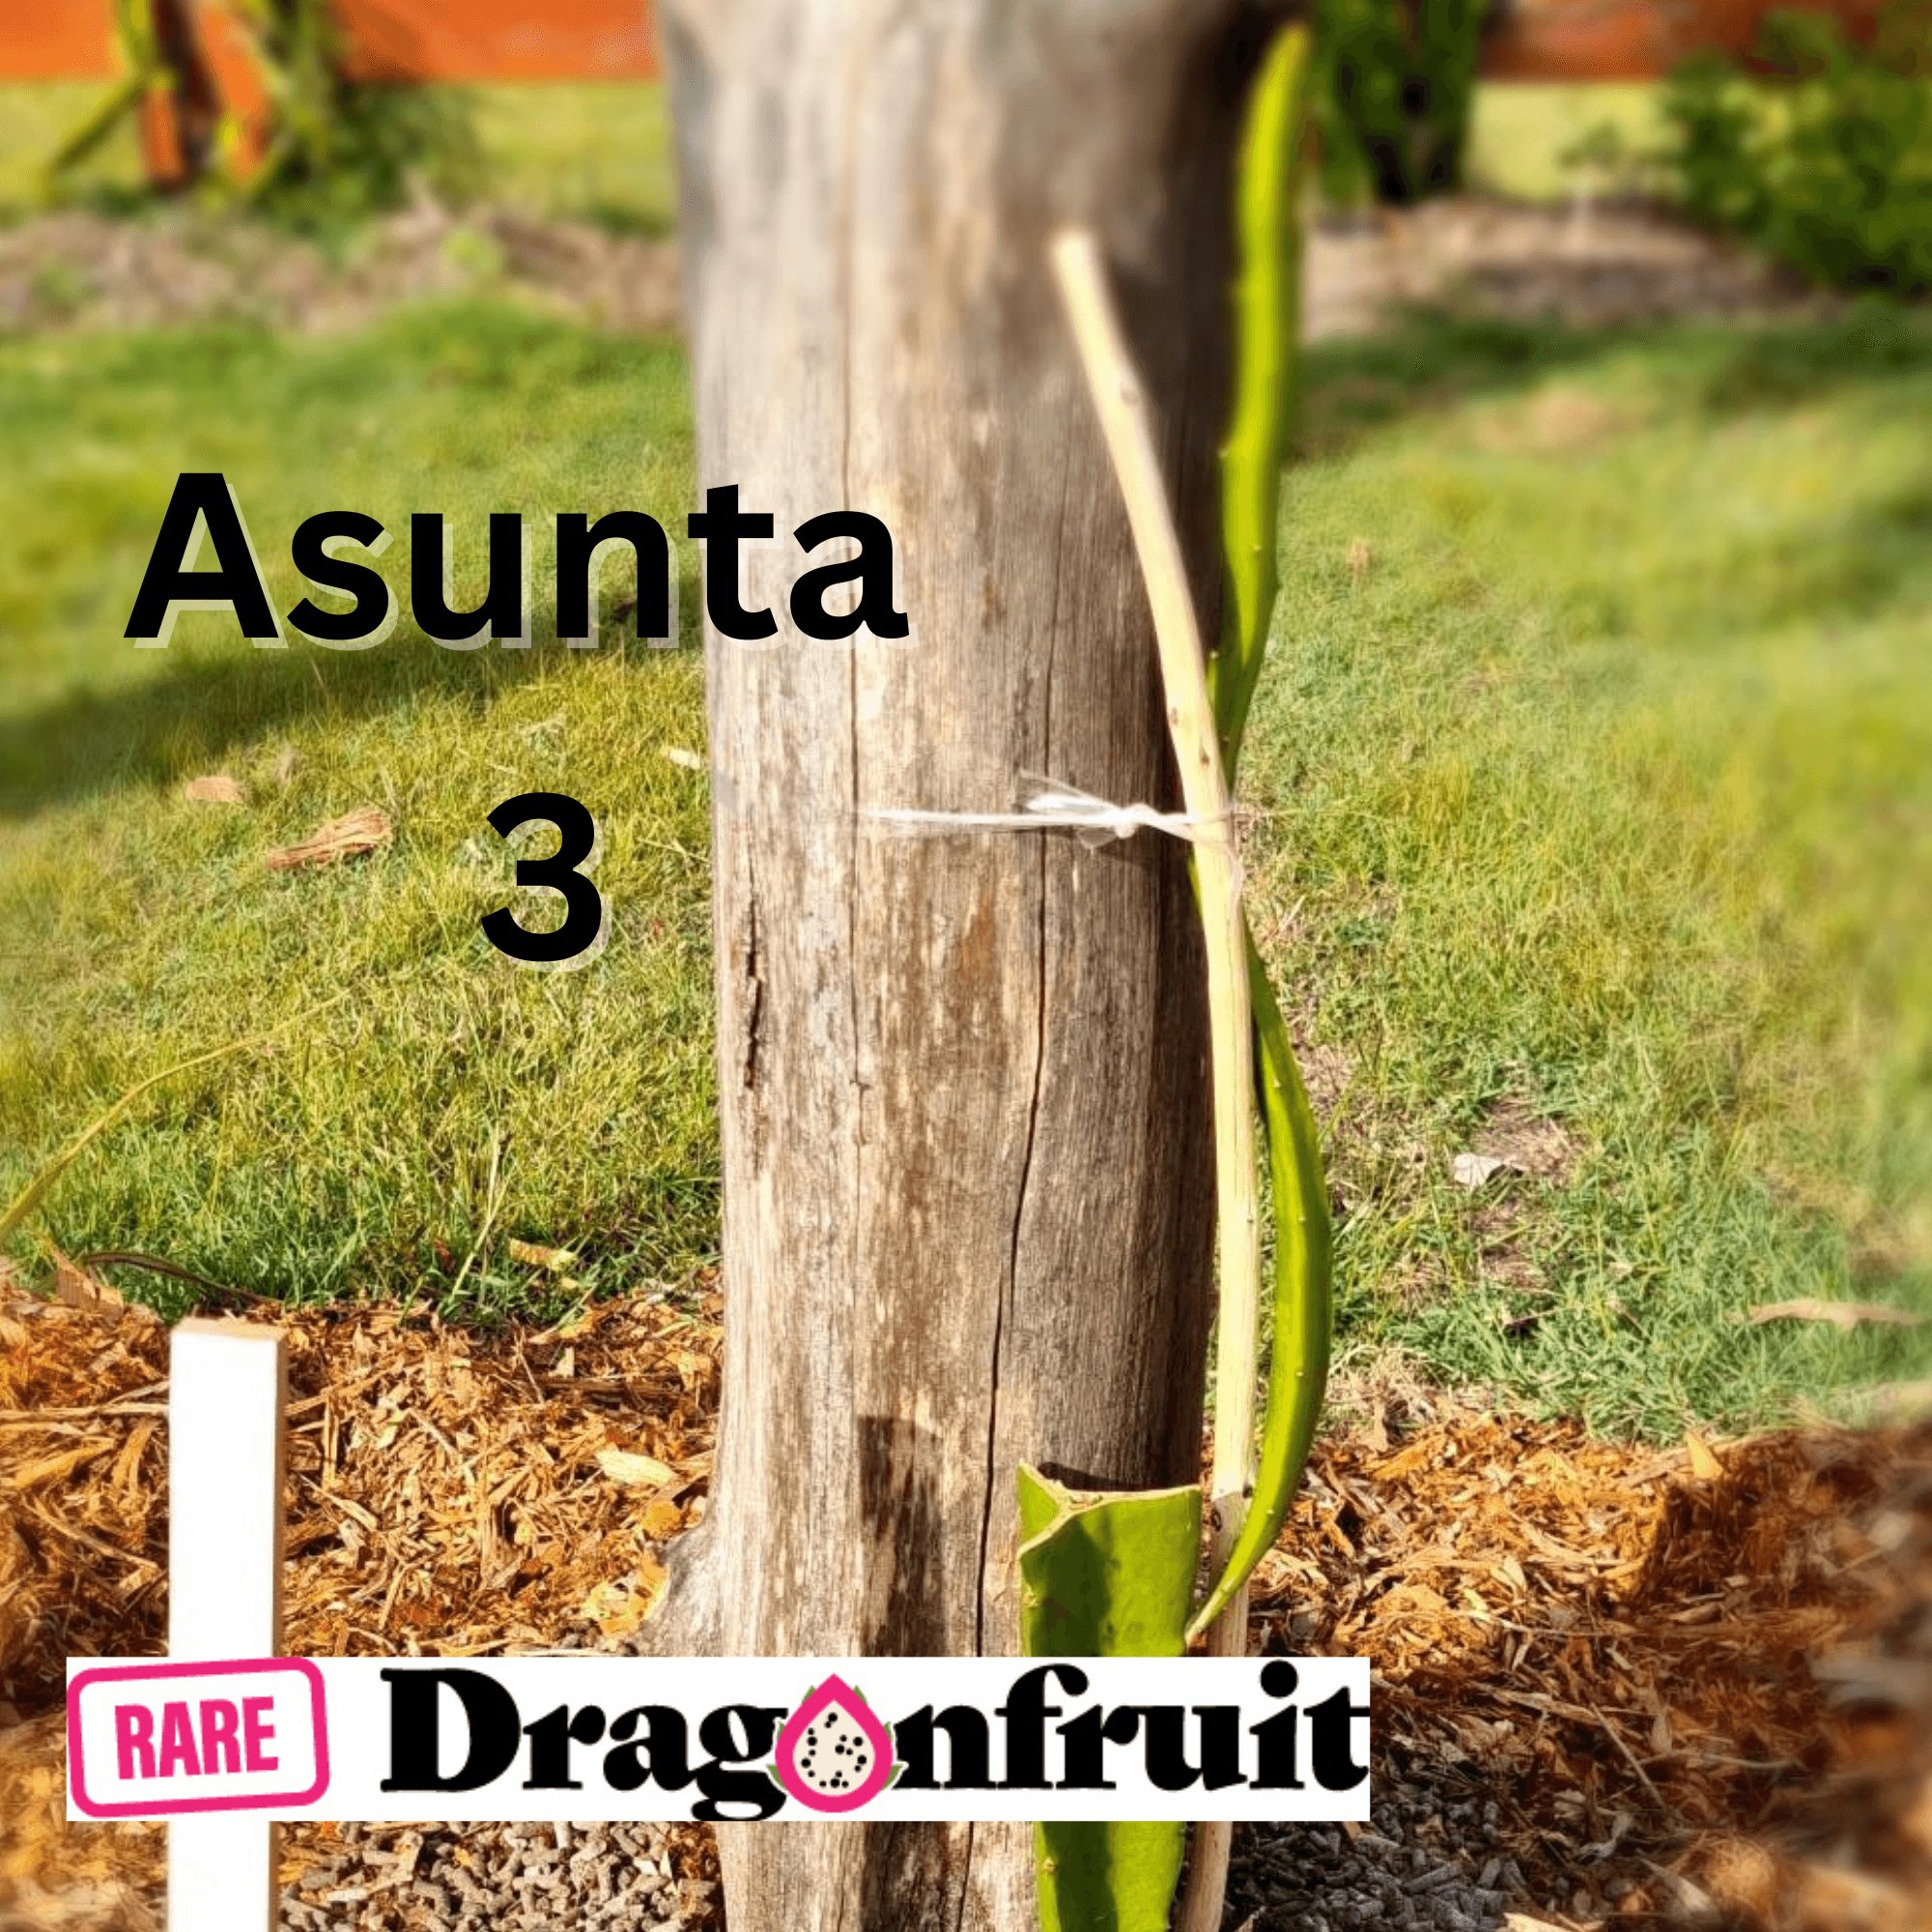 New Asunta 3 dragon fruit - Rare Dragon Fruit